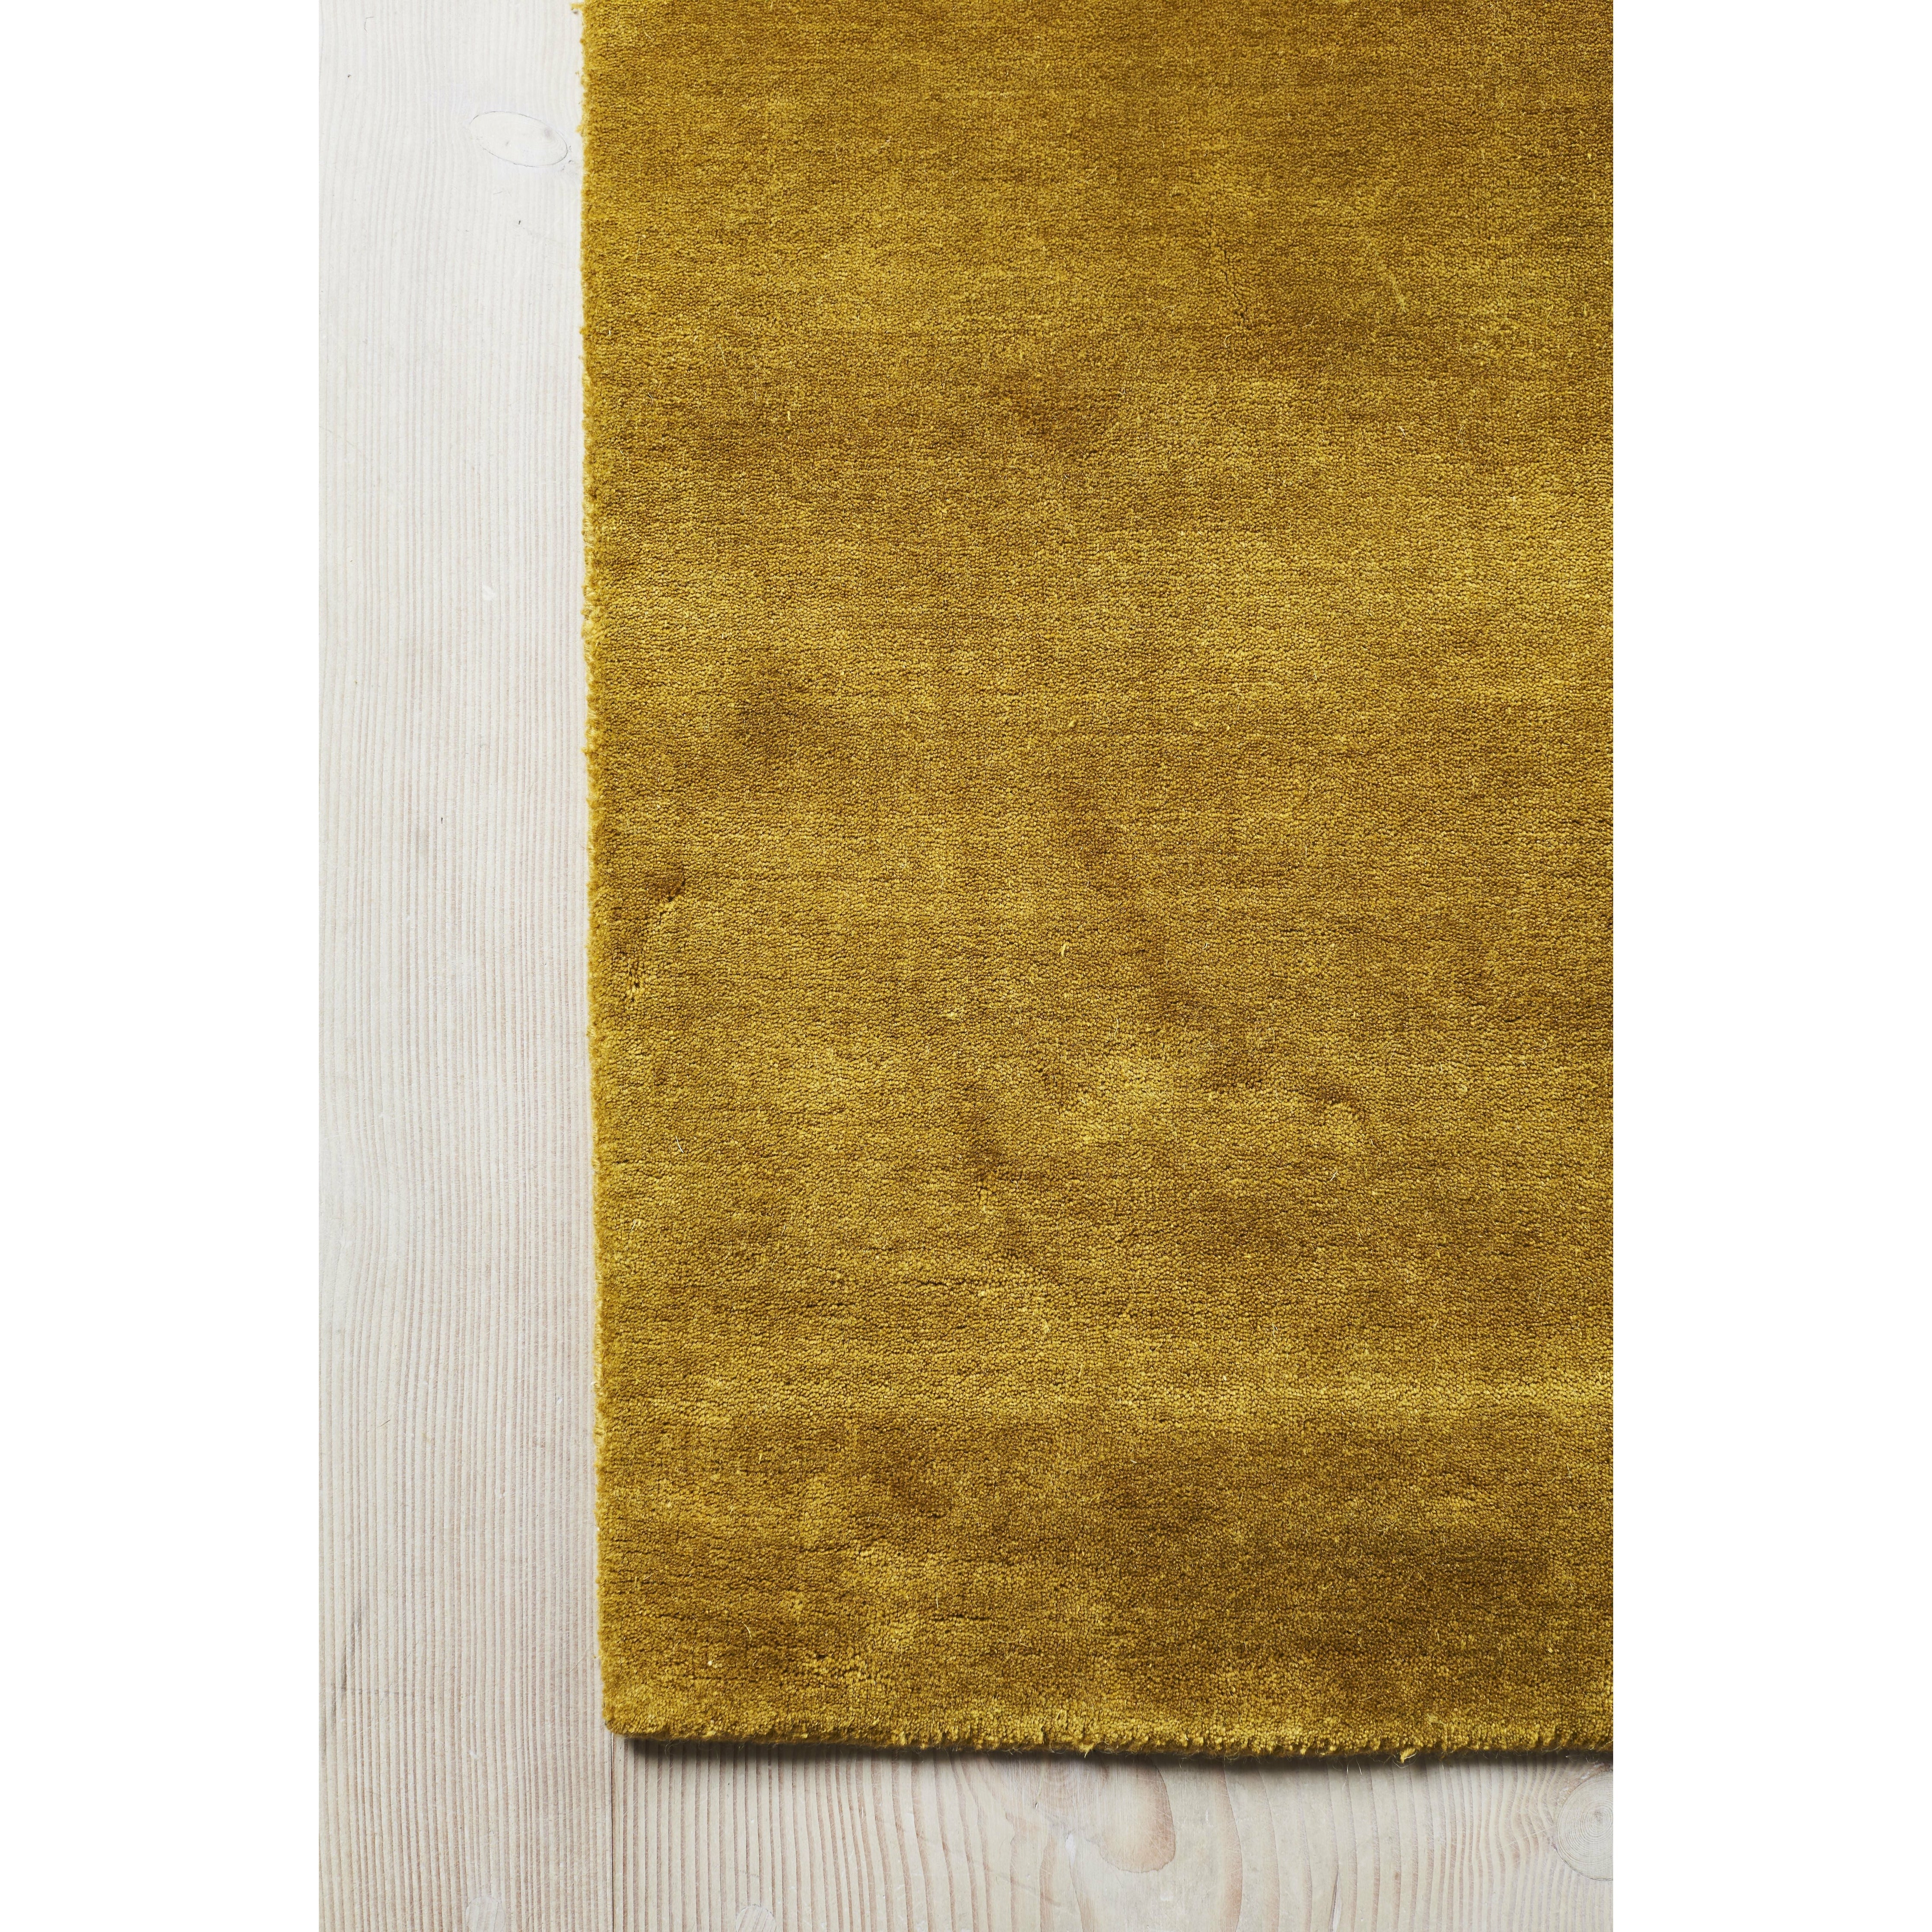 Massimo Earth Bamboo Rug Chinese geel, 200x300 cm